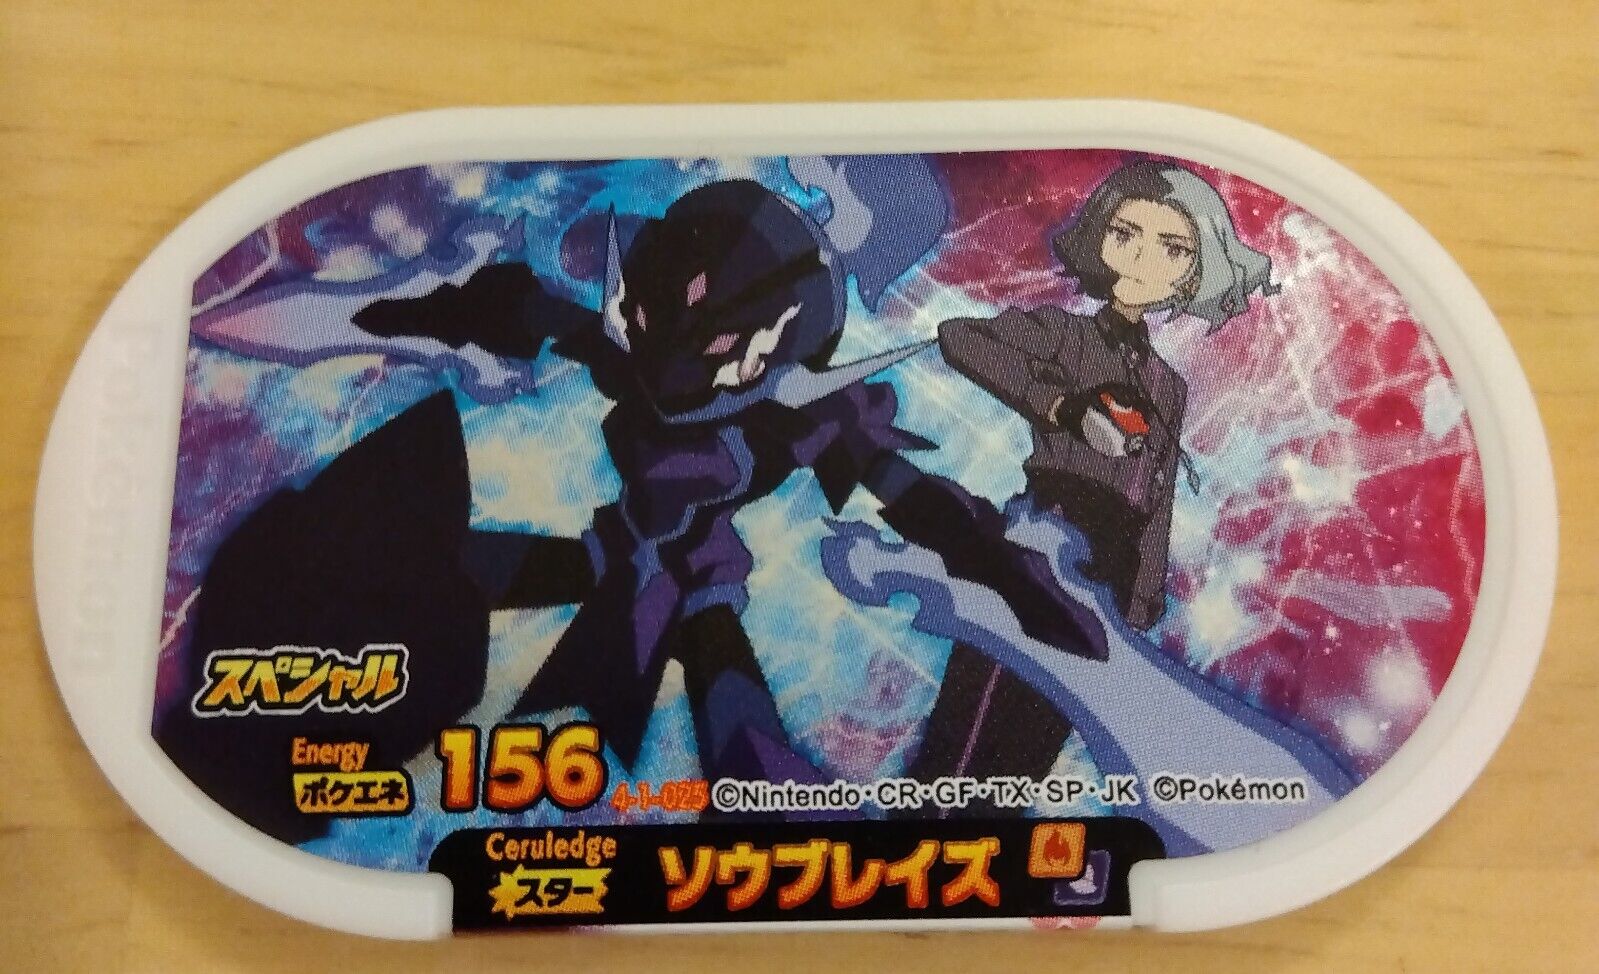 Amethio\'s Ceruledge Mezastar Pokemon Card Special energy 156 Nintendo TAKARA